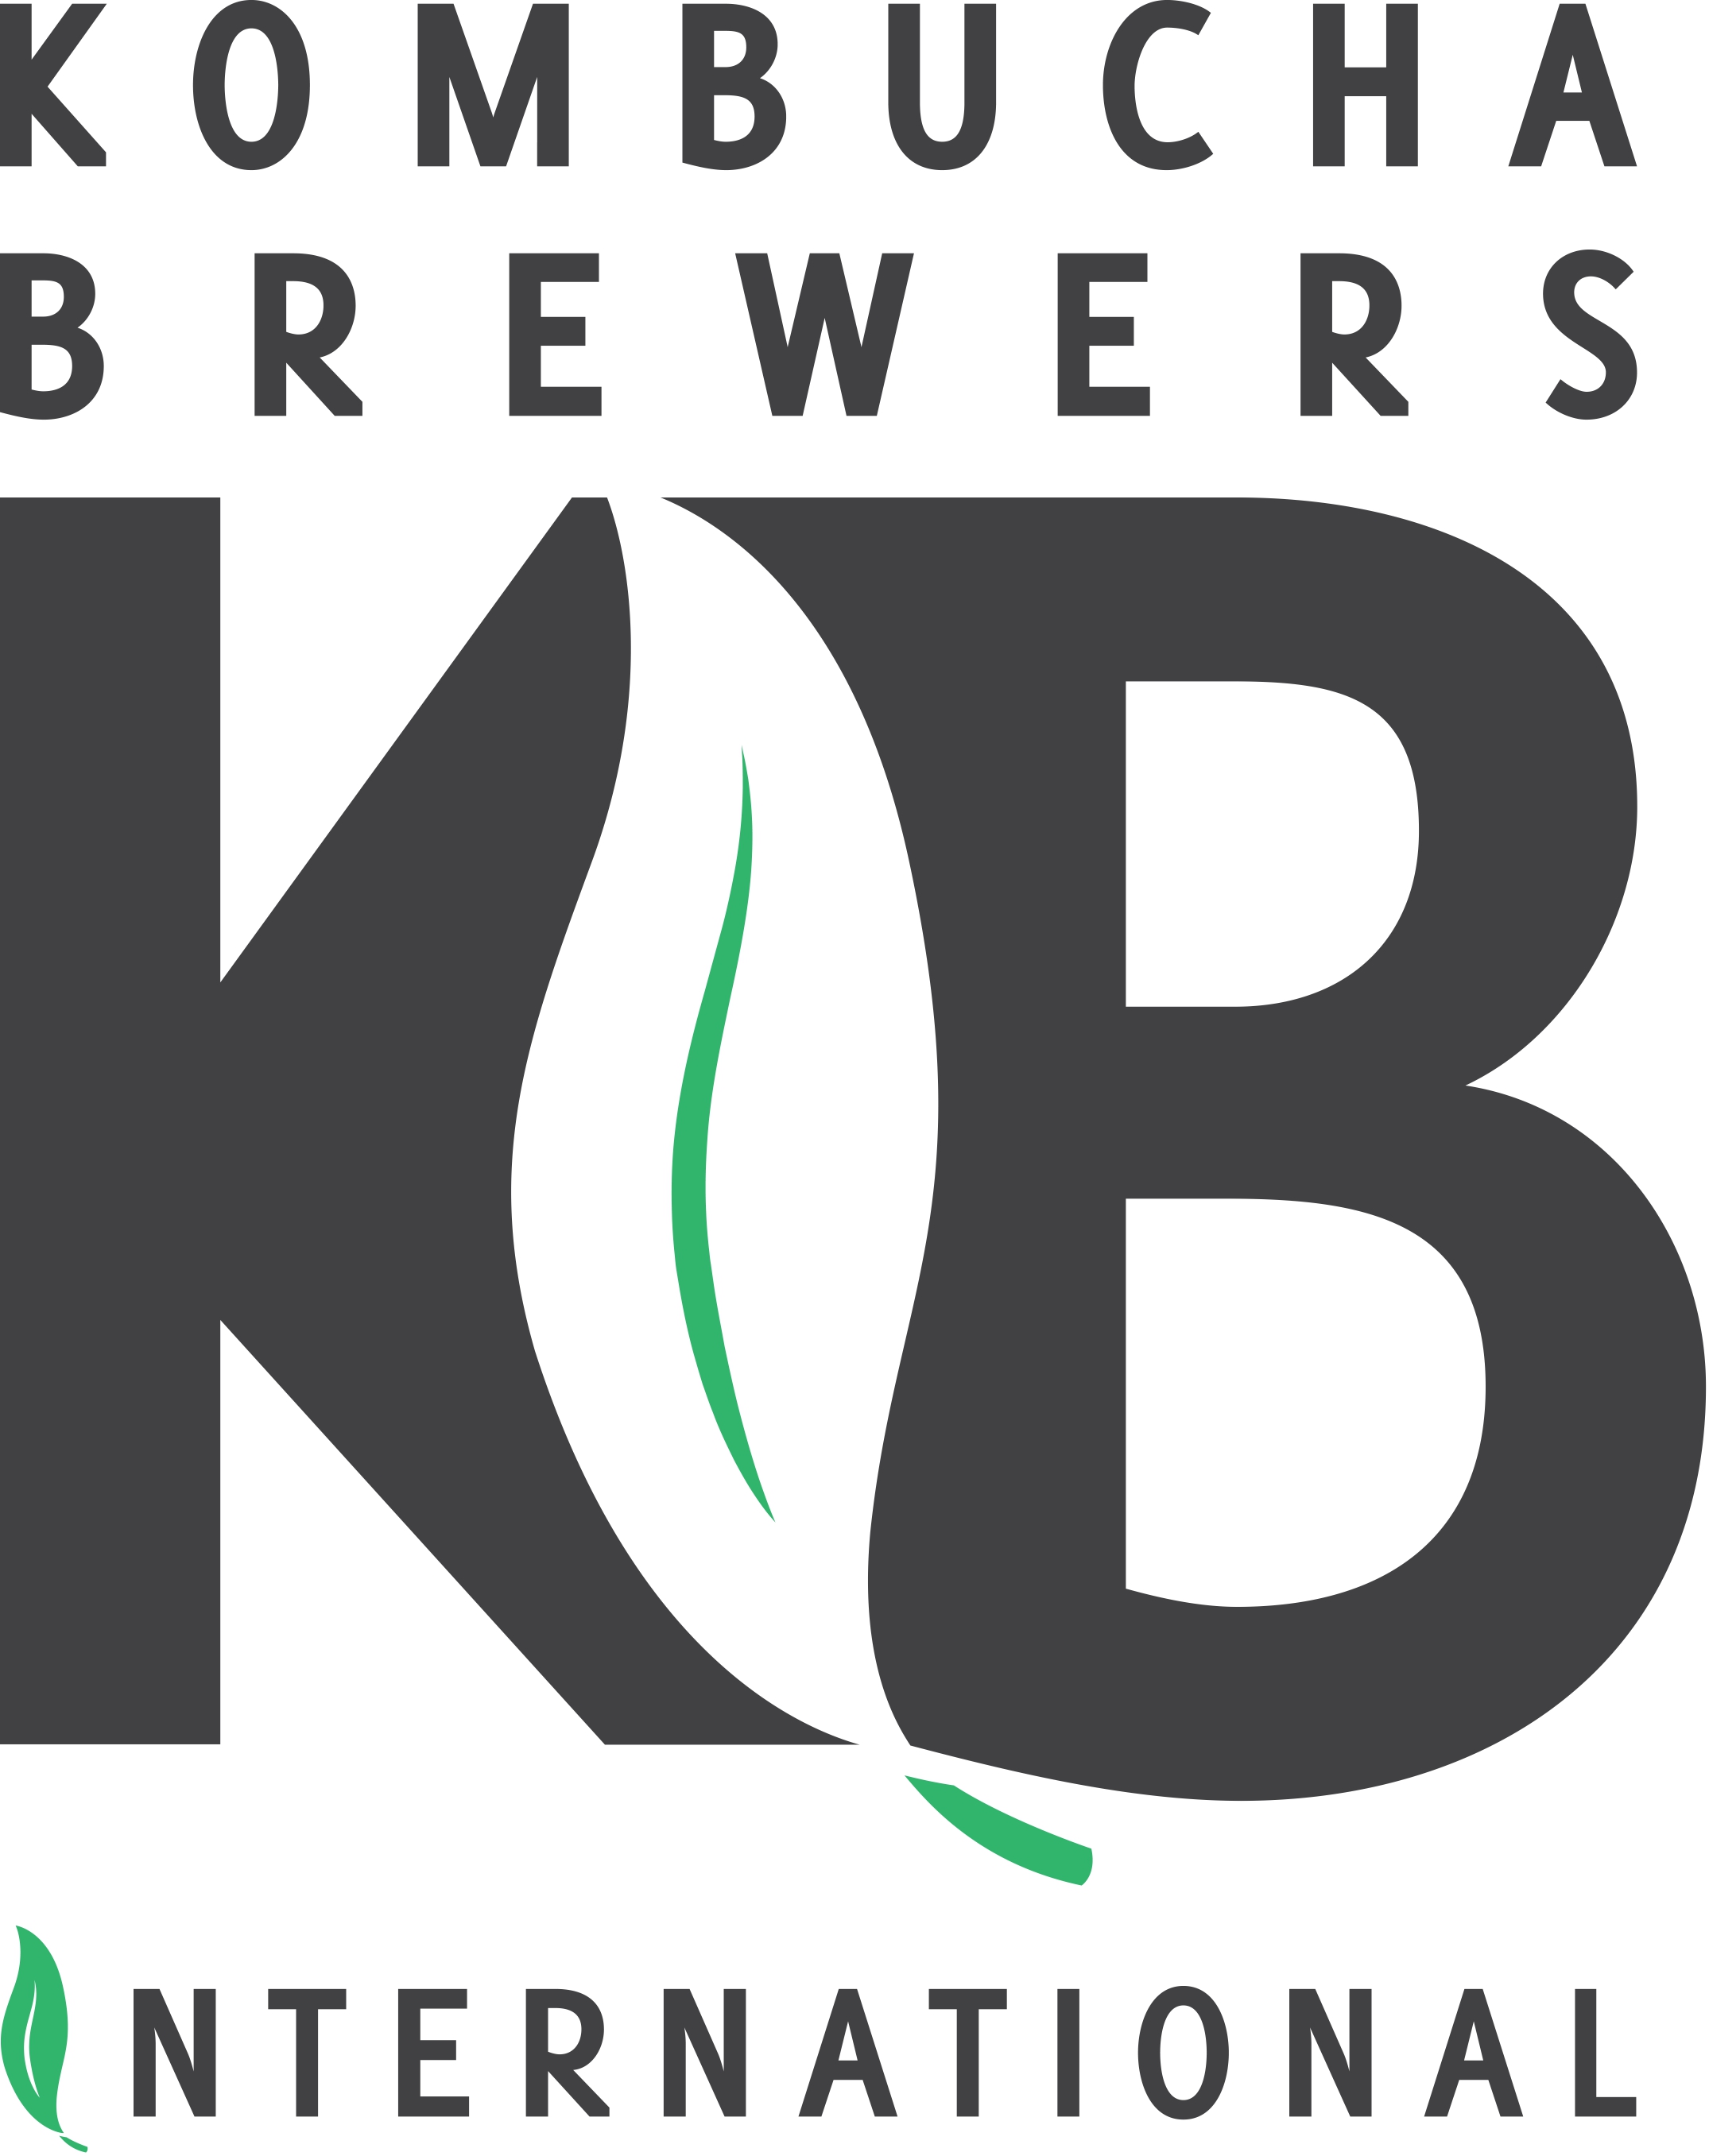 Kombucha-Brewers-International-logo_square.jpg